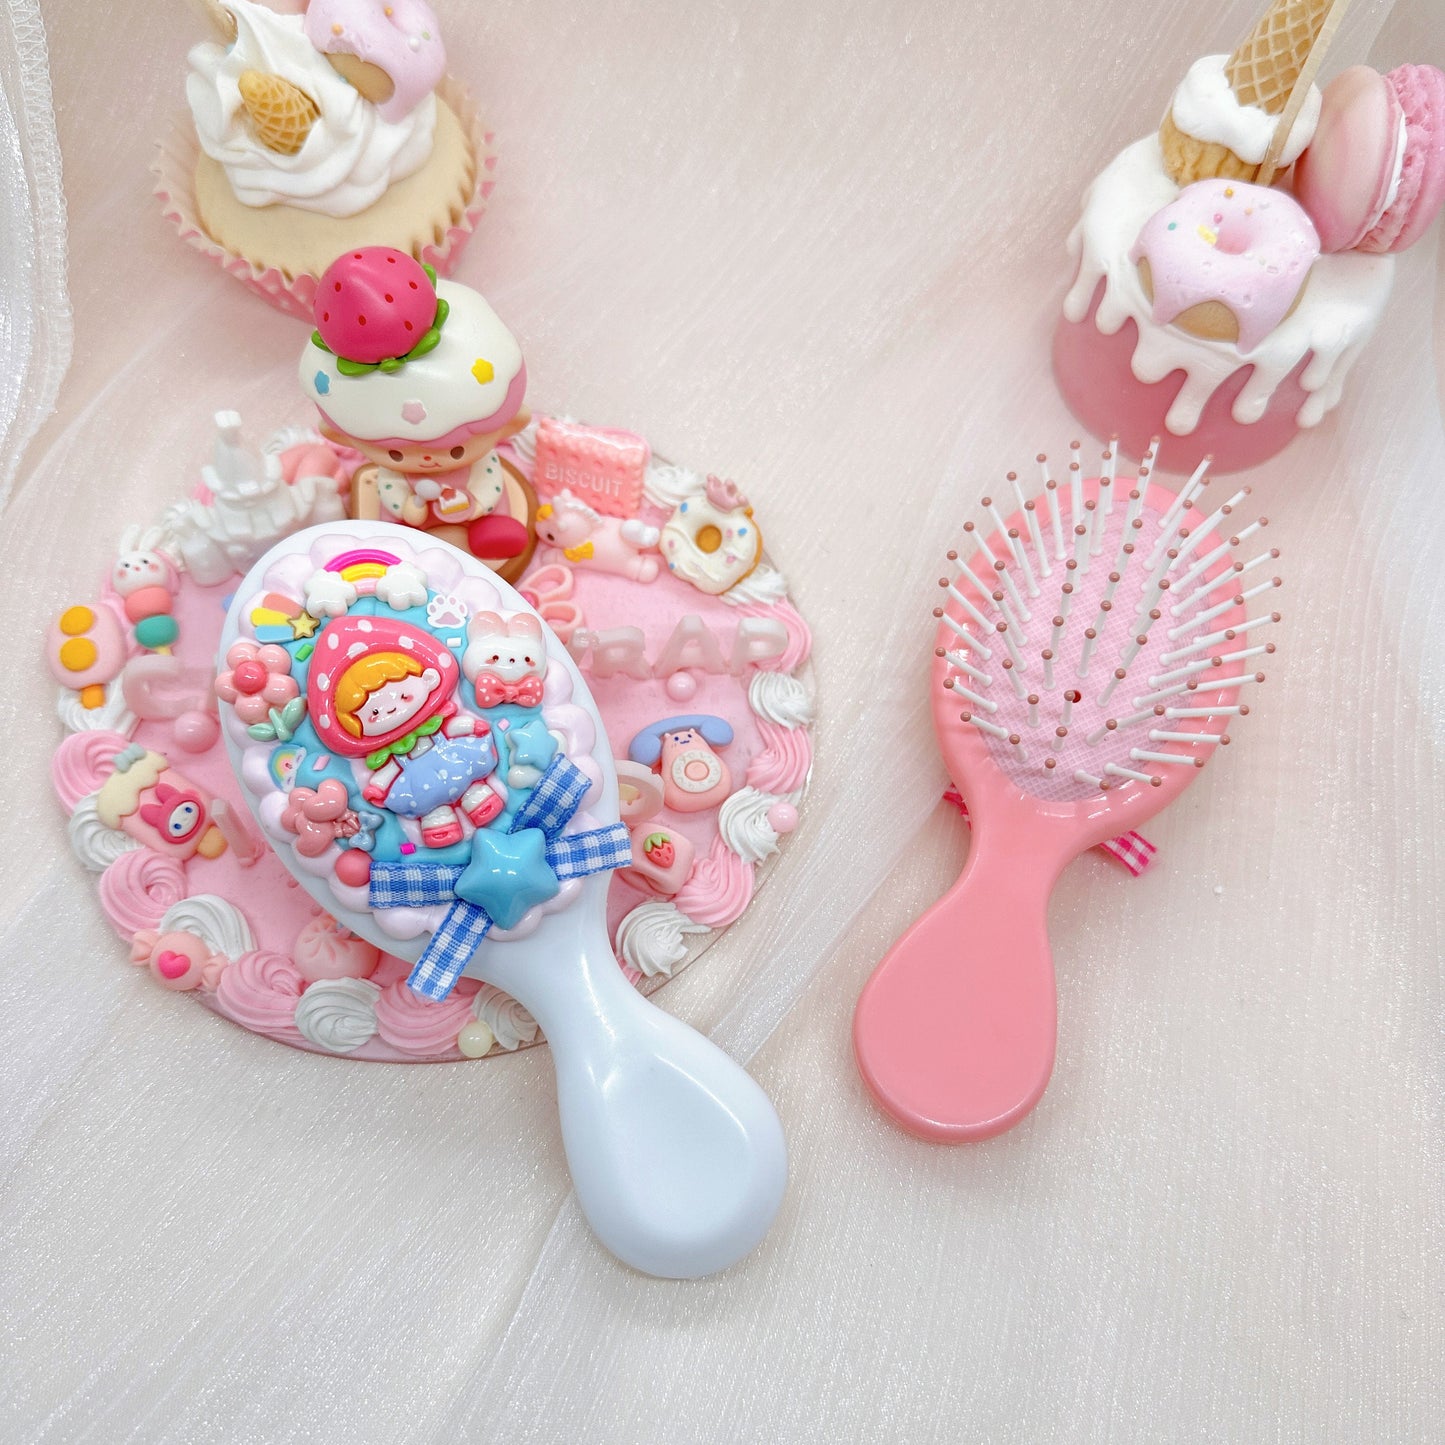 Handmade hairbrush, Kawaii Decoden Hairbrush, Cute Cartoon Hairbrush